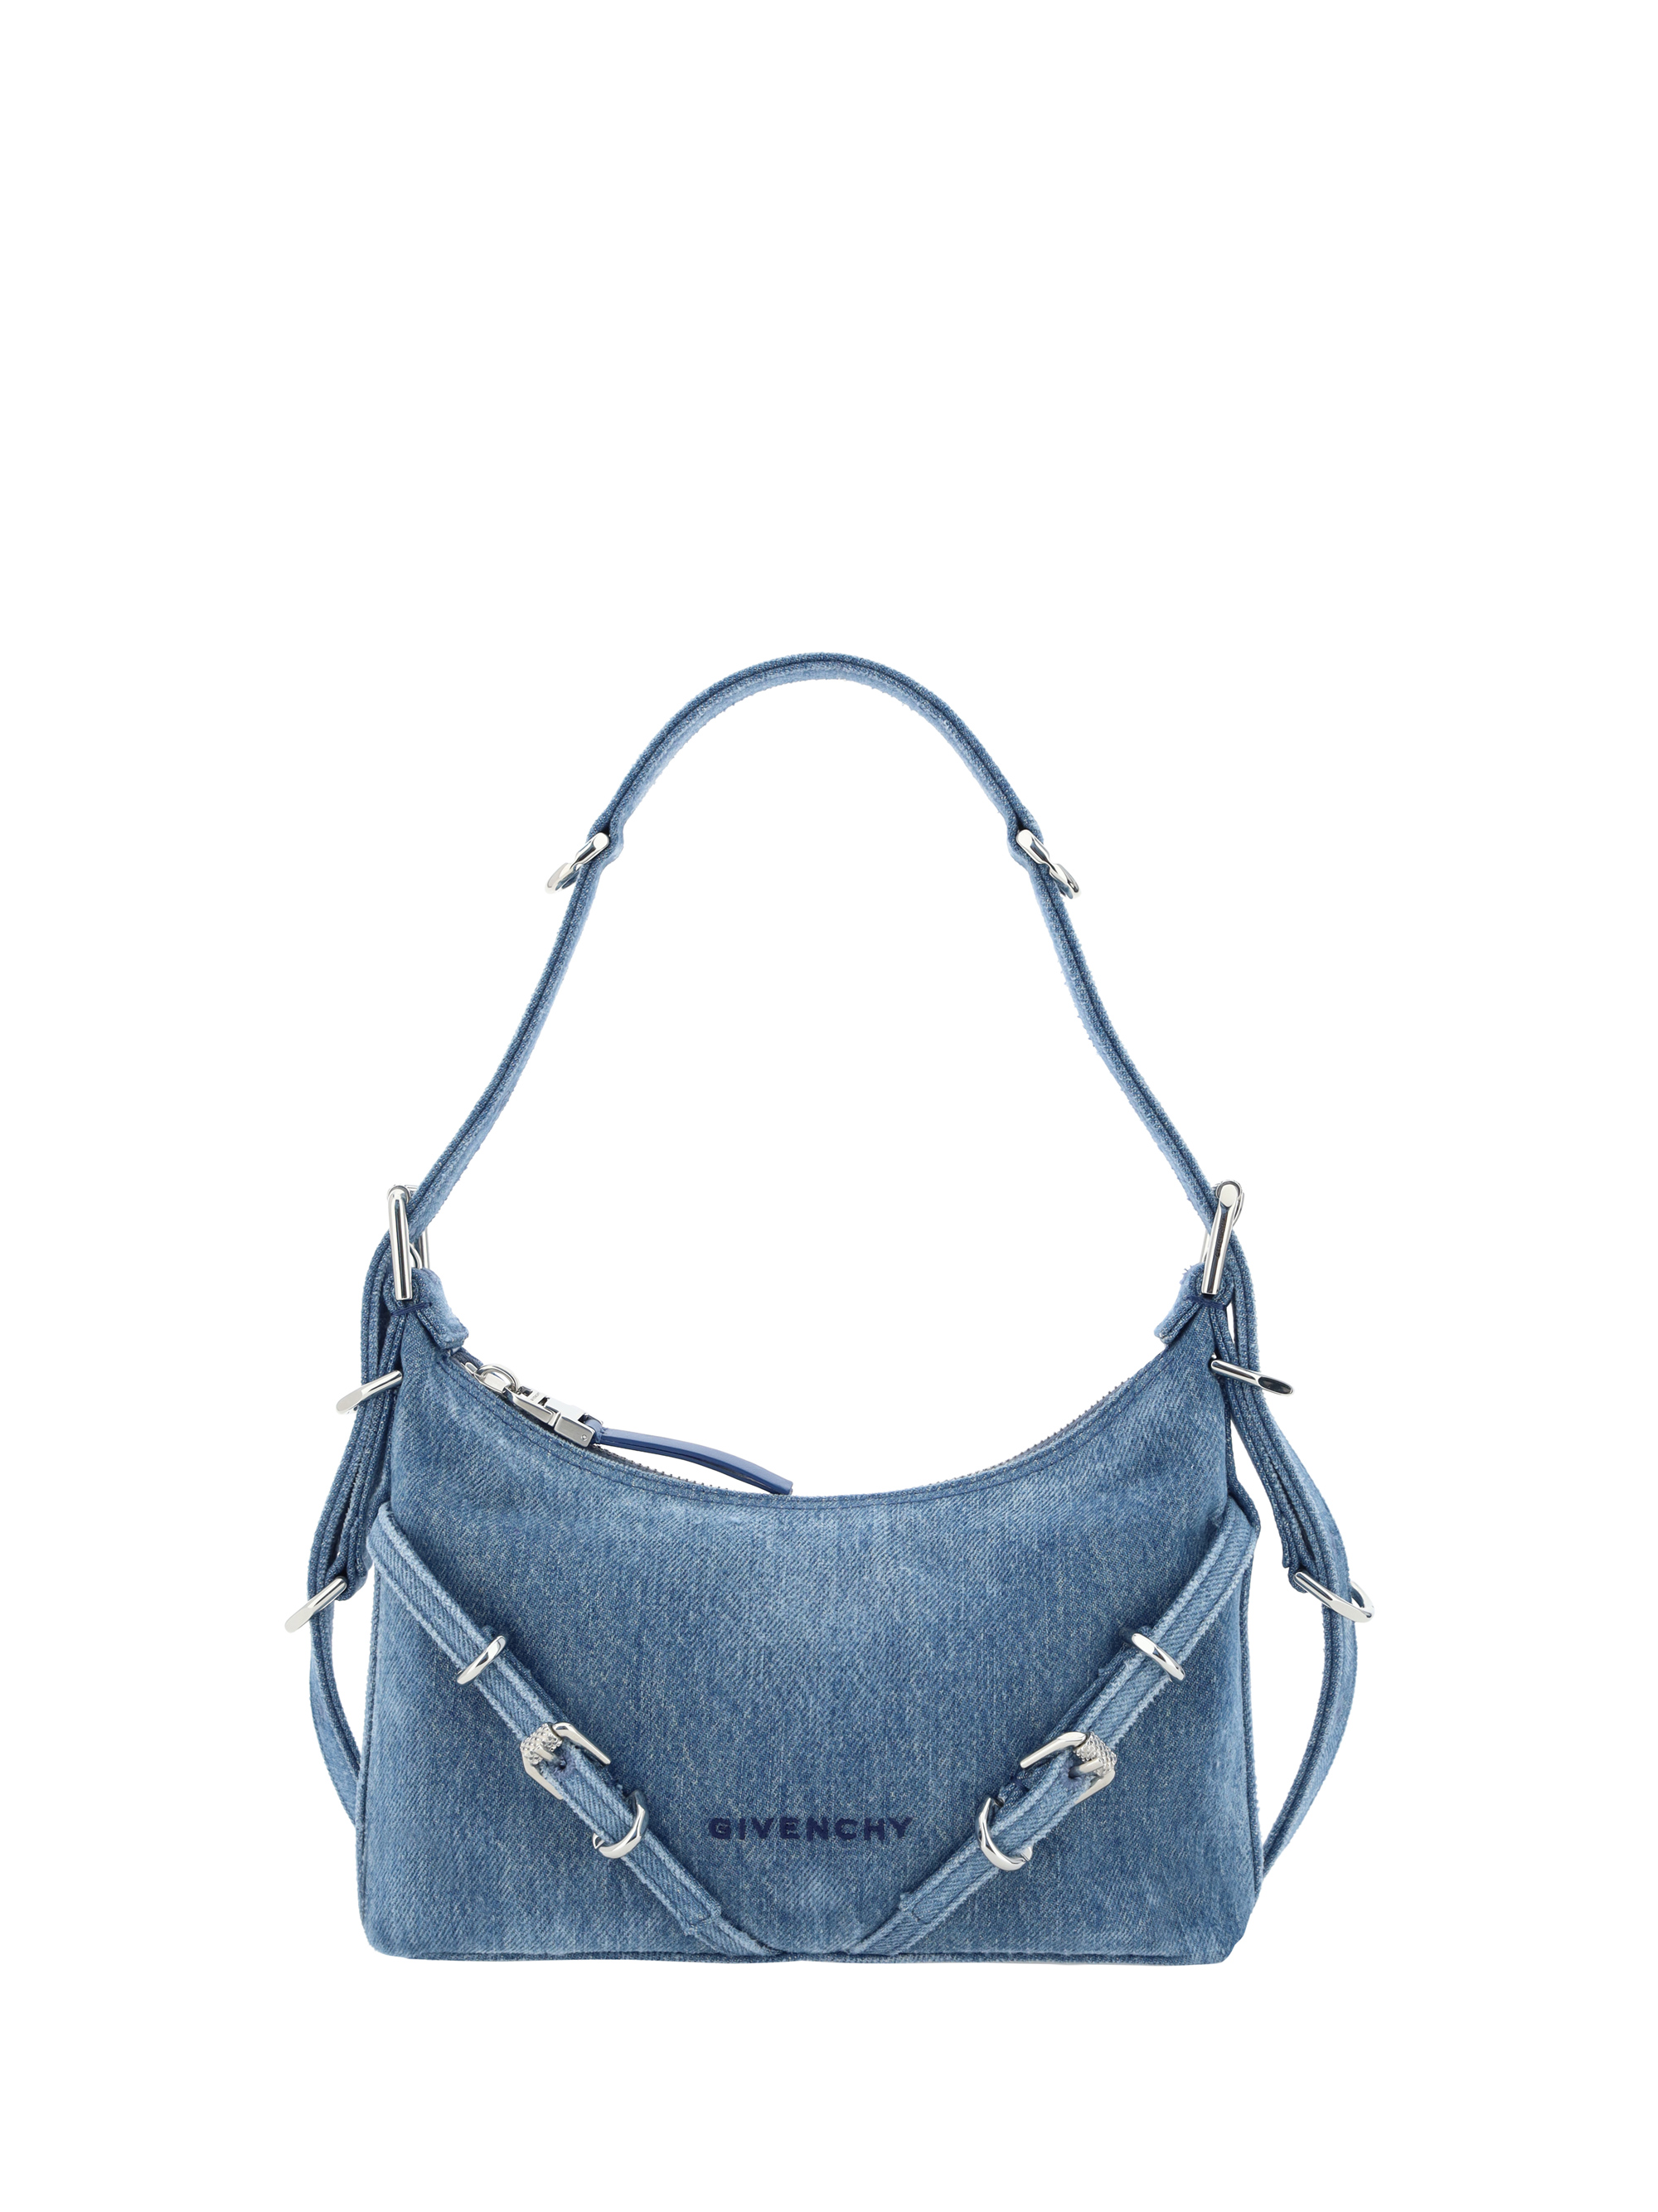 Givenchy Antigona Toy Embellished Top-Handle Bag